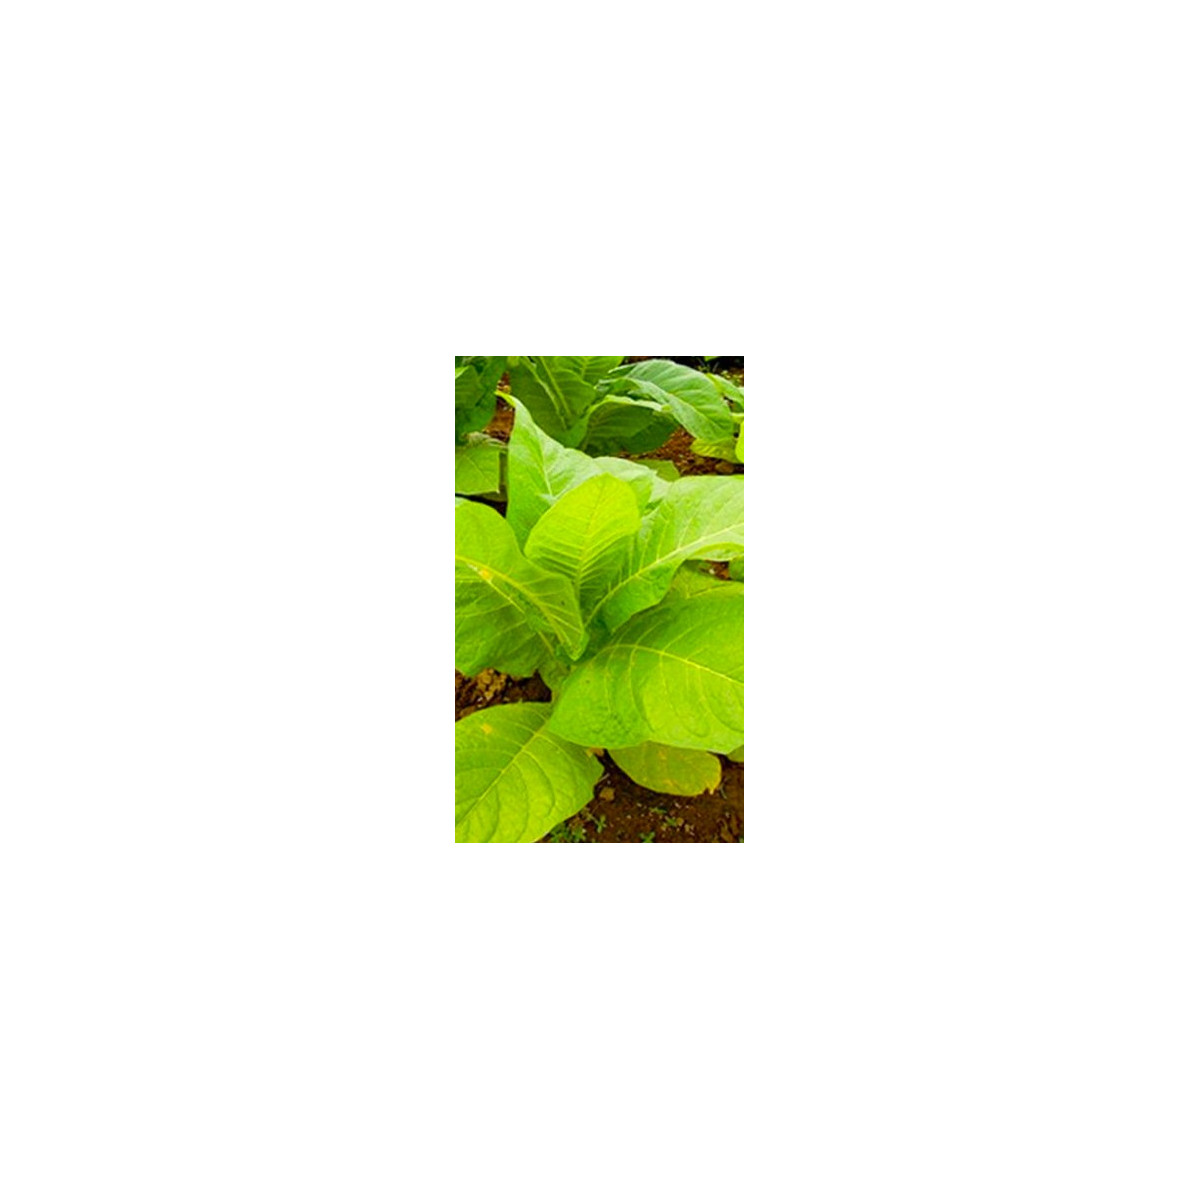 Tabák Madole SPECIÁL - Nicotiana tabacum - semena - 20 ks